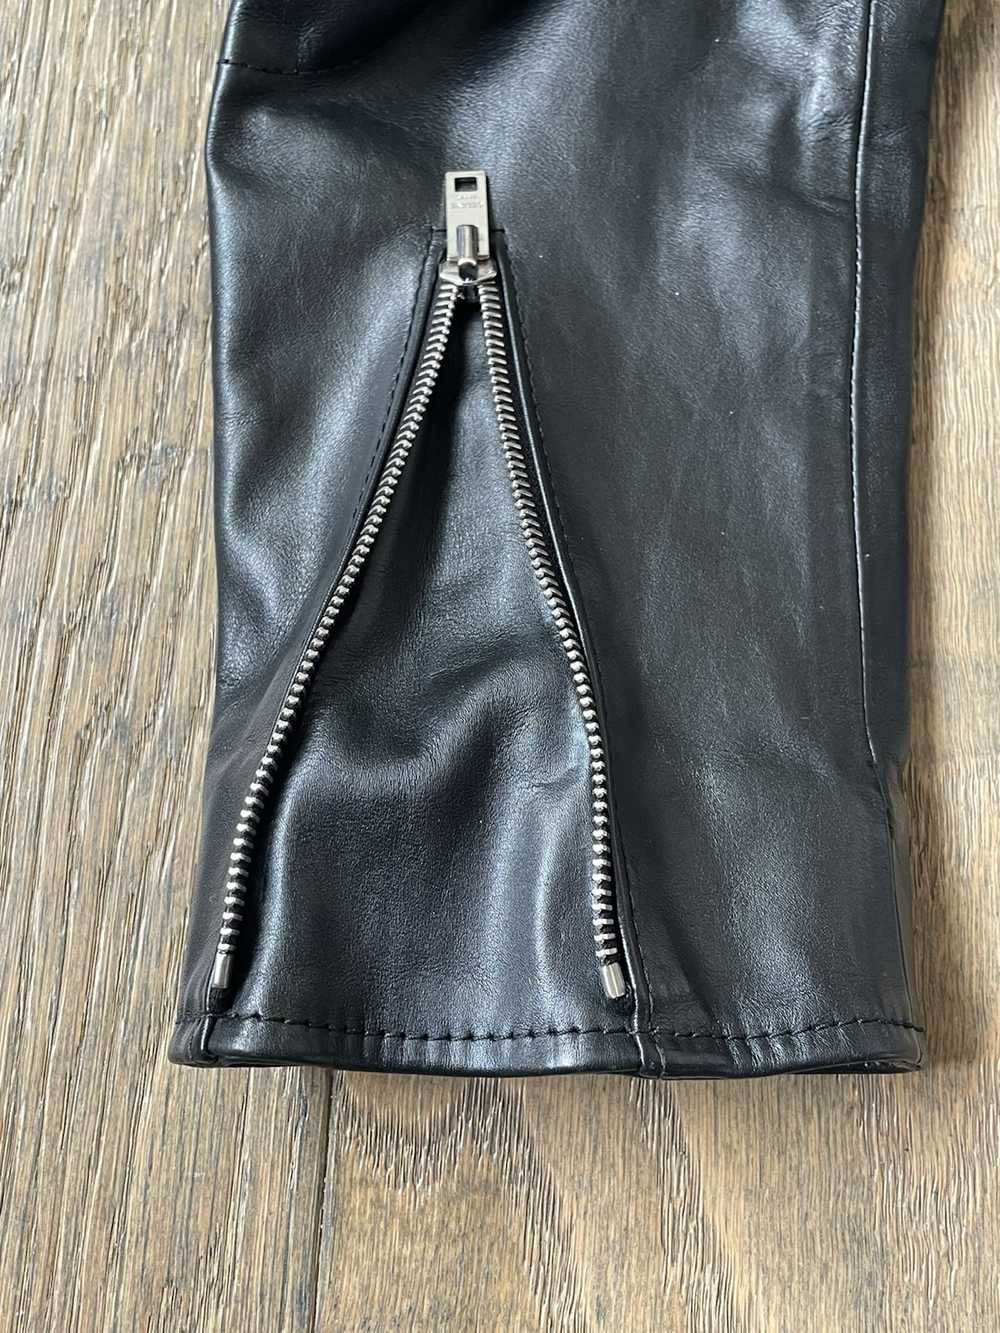 Celine Celine Motorcycle Leather Jacket - image 12